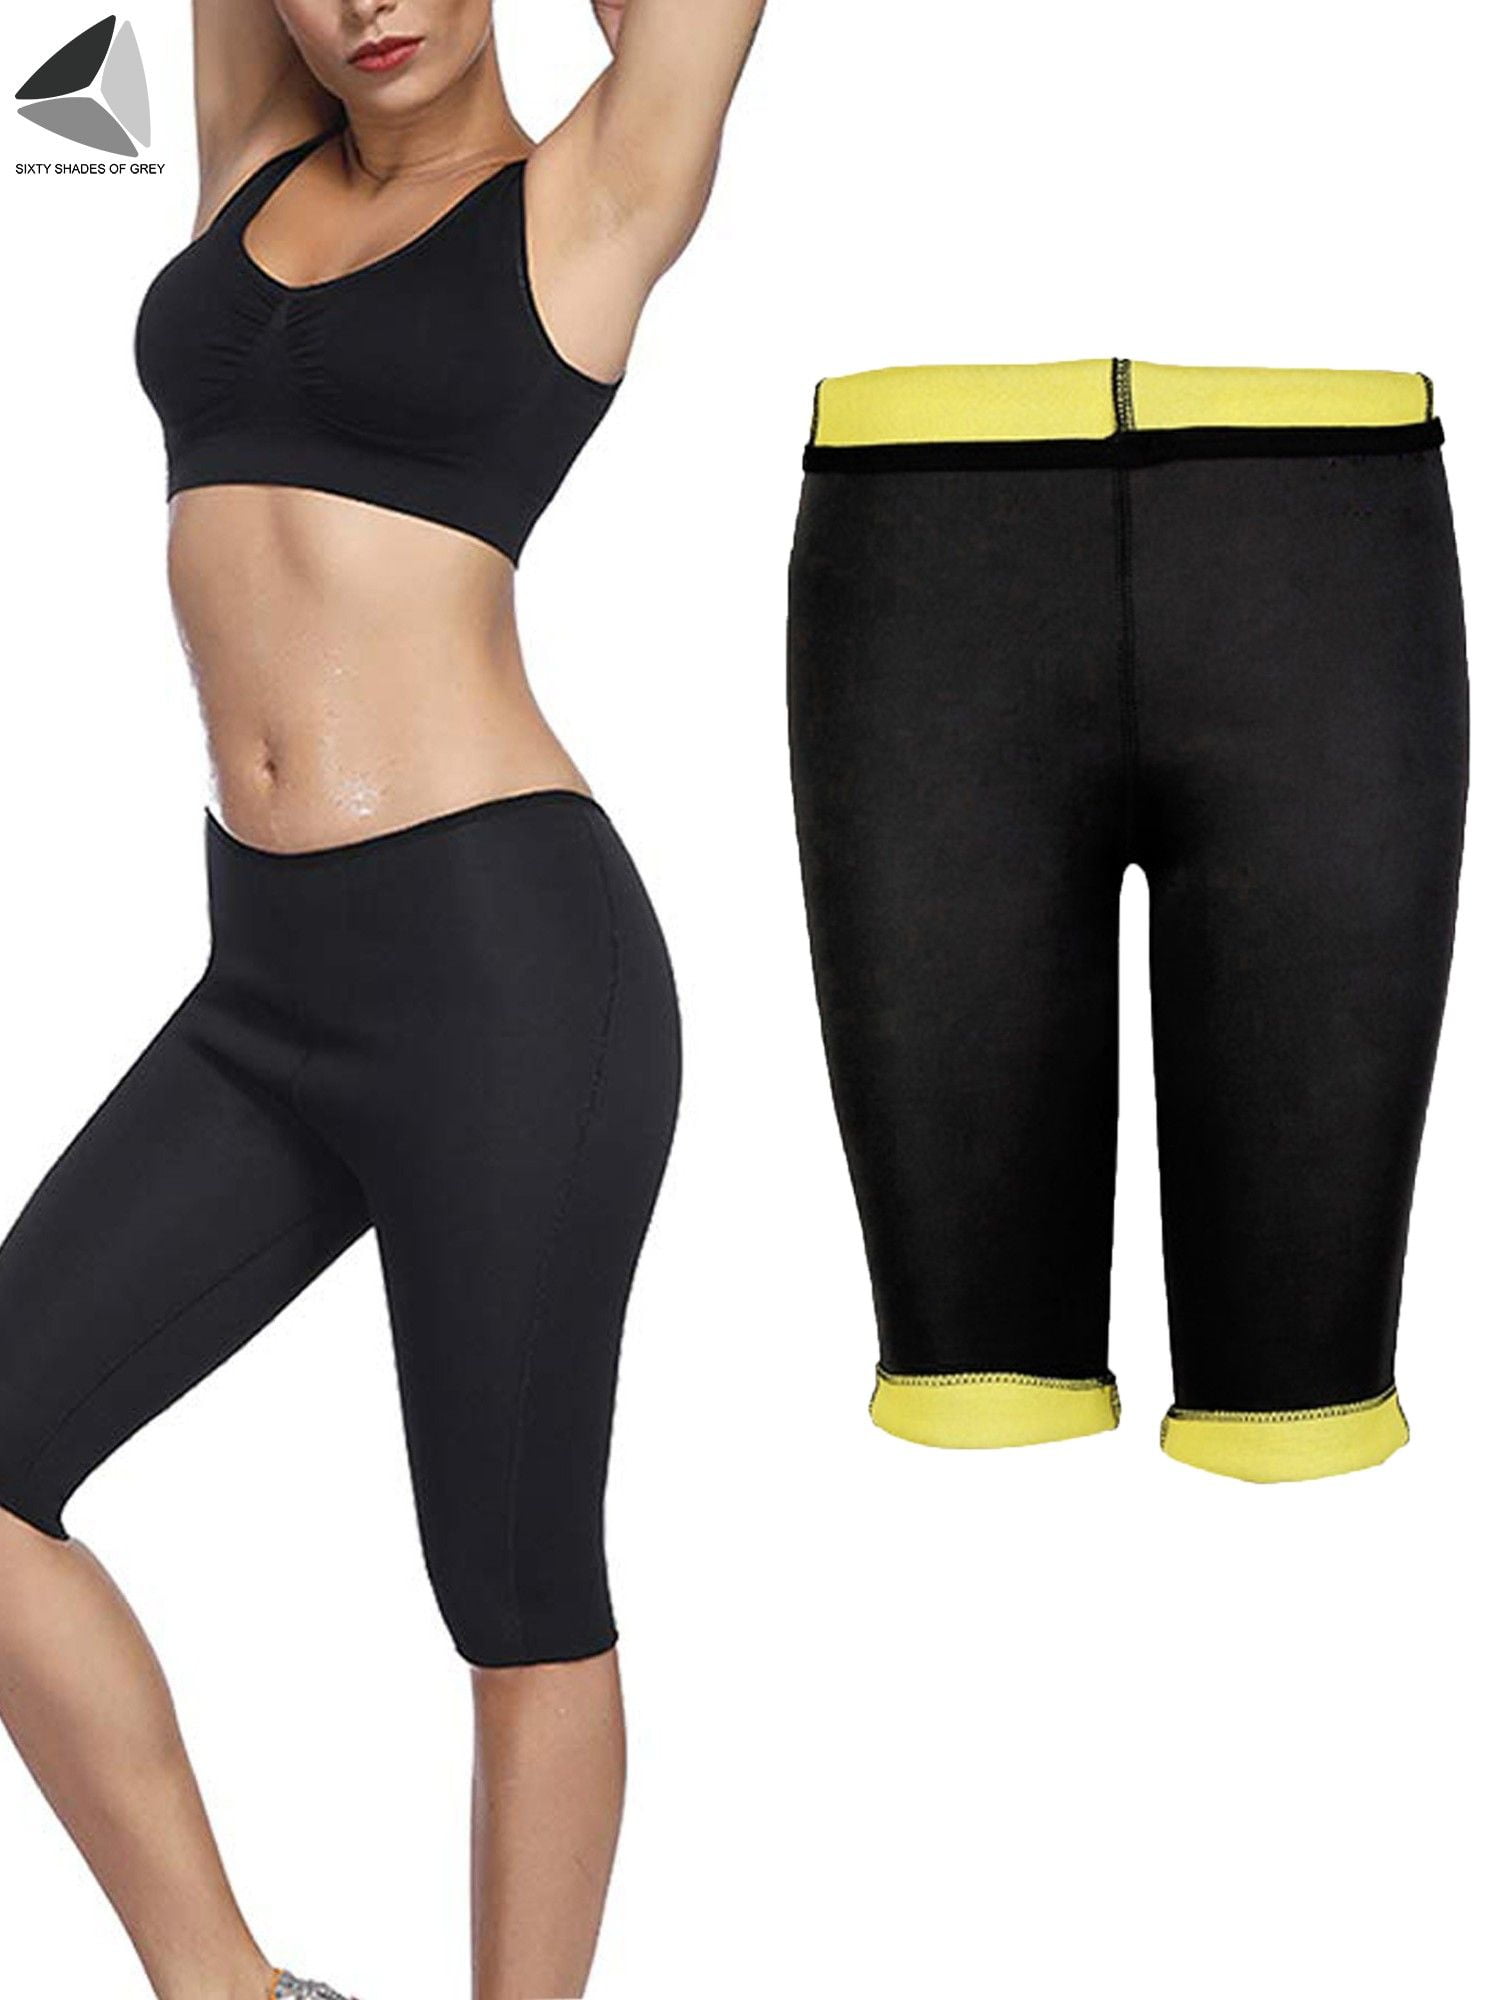 PULLIMORE Womens Sweat Sauna Body Shaper Neoprene Slimming Pants Tummy  Control Weight Loss Capri Leggings (Size 3XL) 